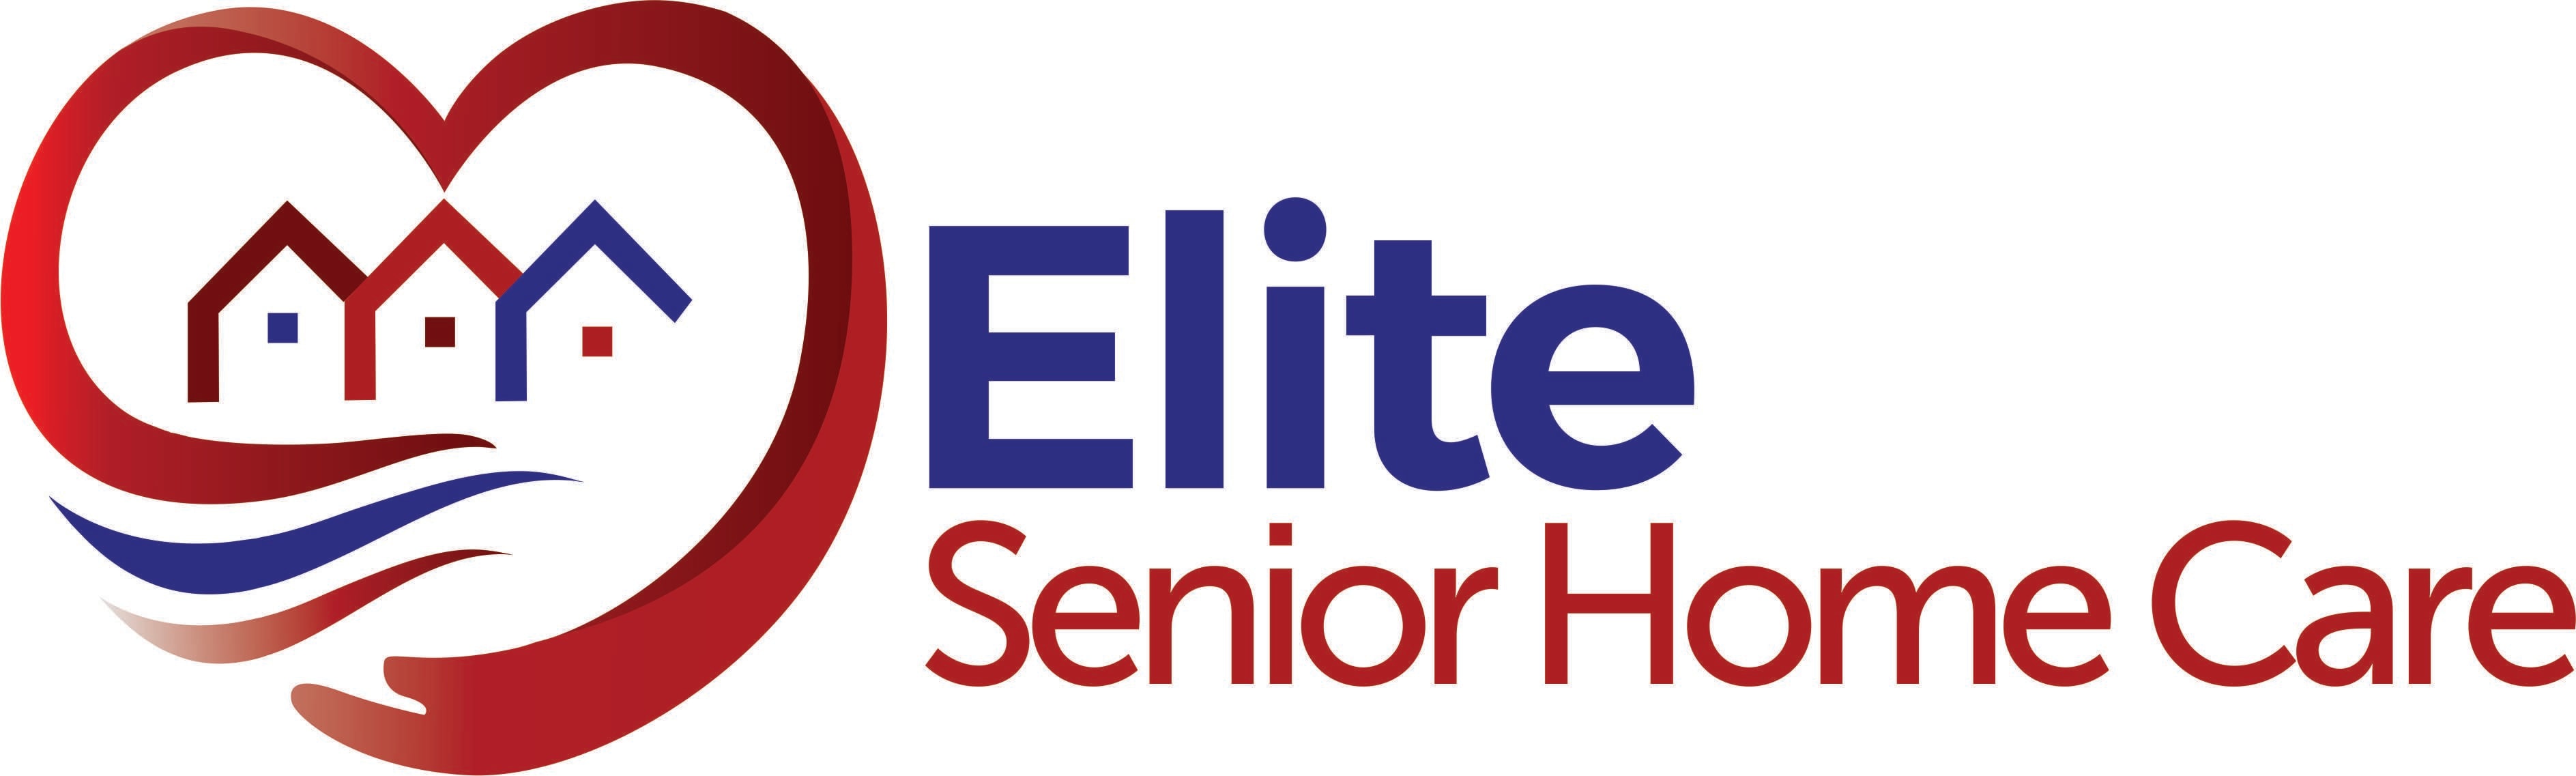 Elite Senior Home Care, LLC 